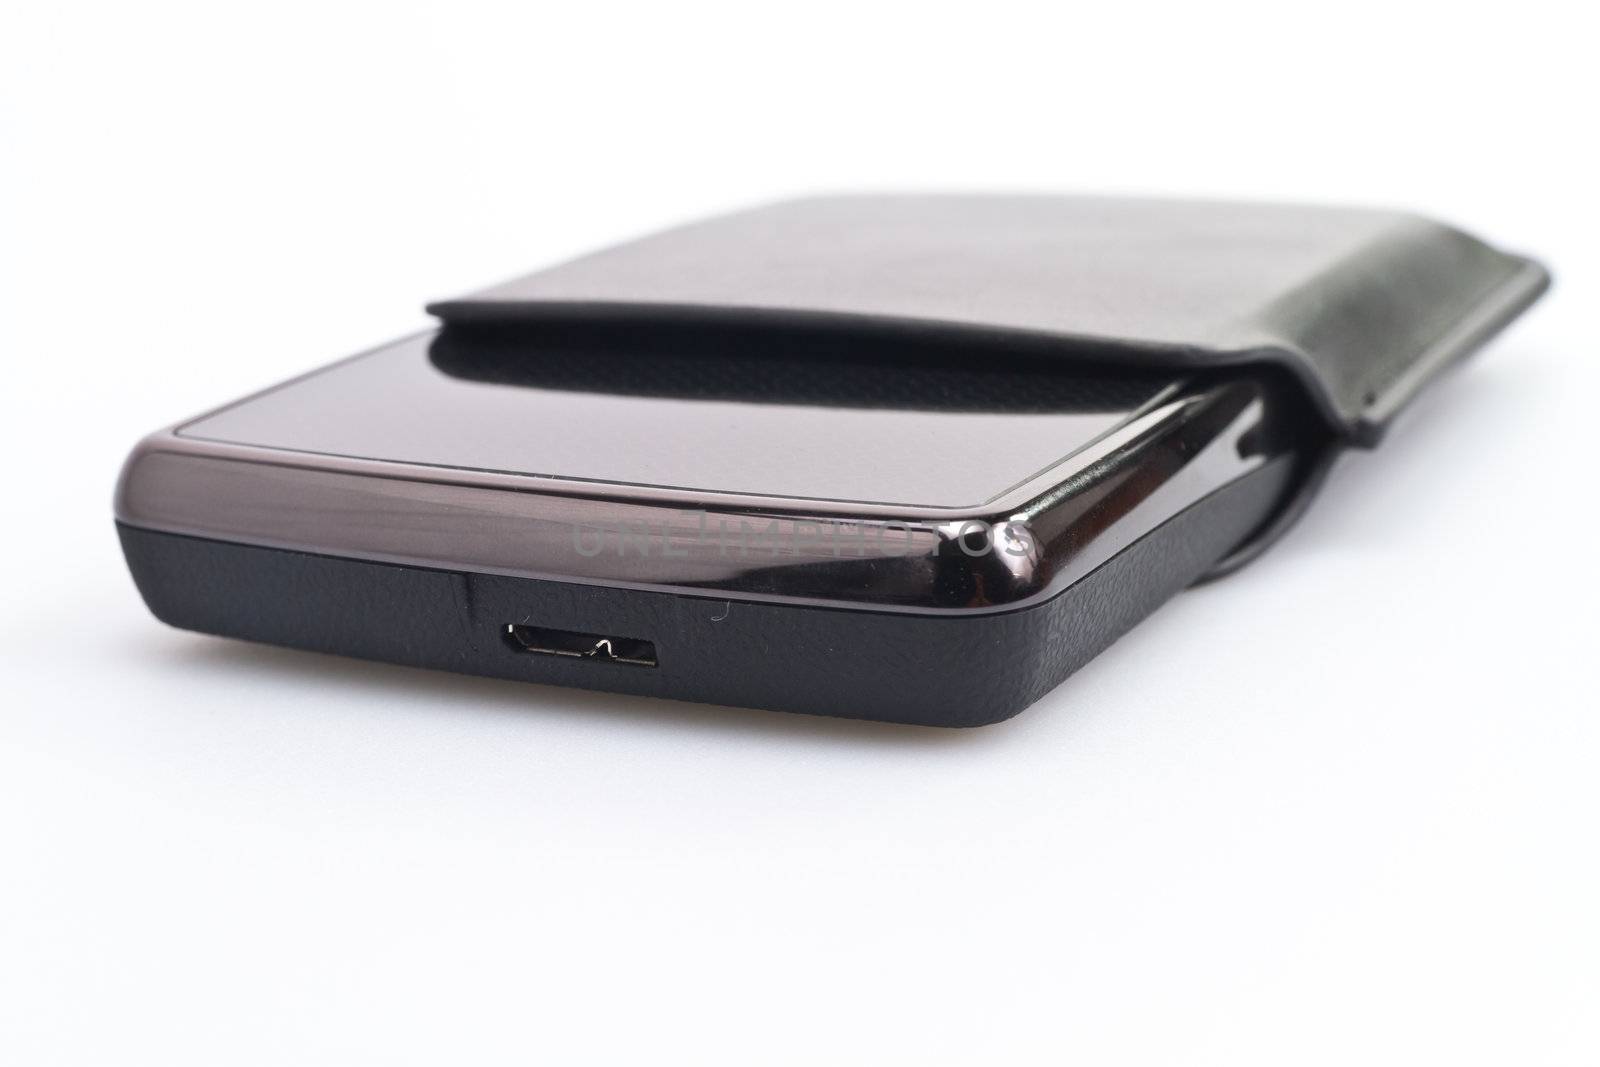 Portable Harddisk Closeup by azamshah72